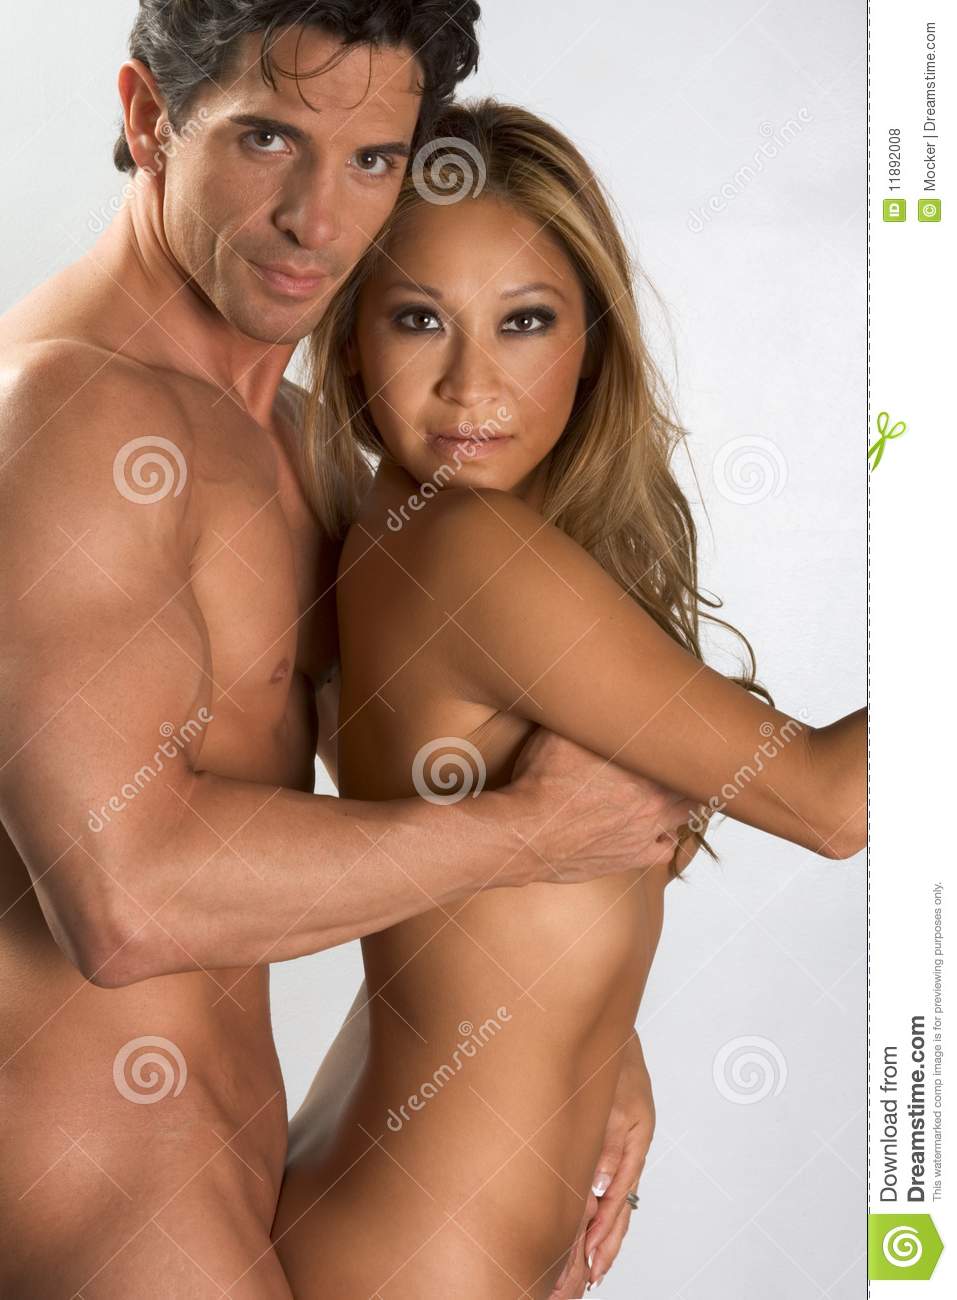 Interracial nude art couples sex